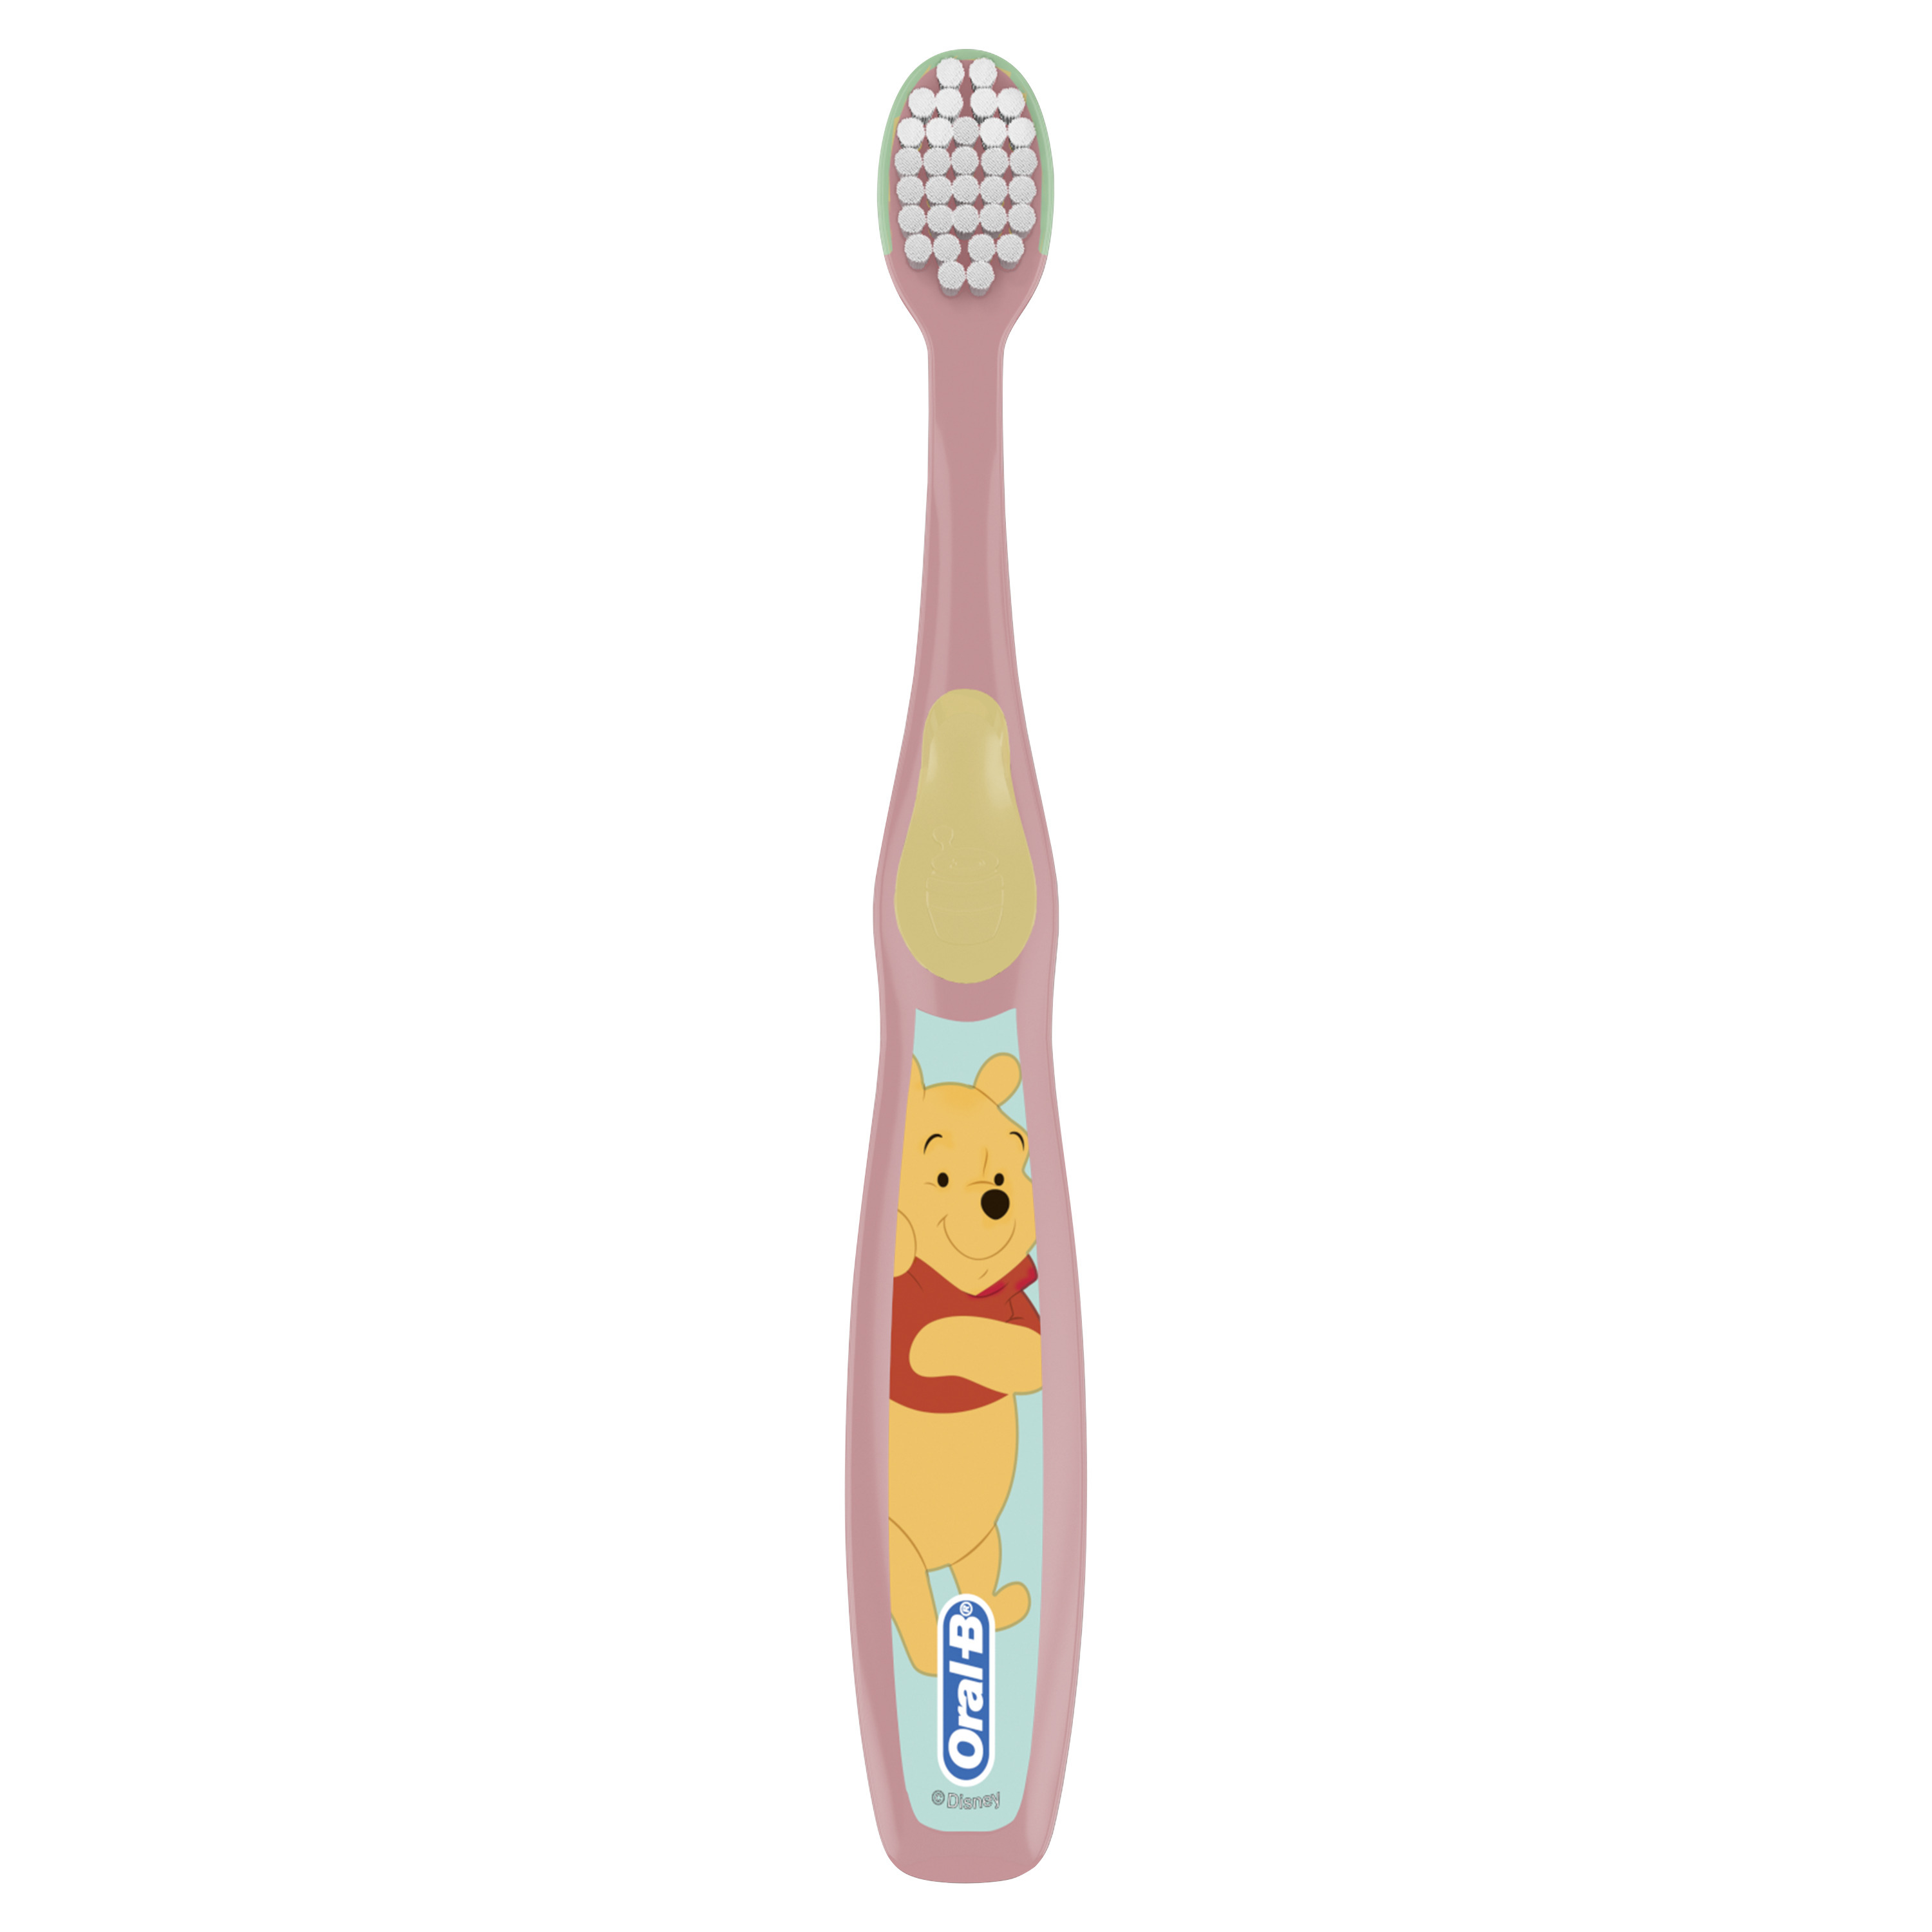 Crest Training Toothpaste and Brush, Fluoride Free, Strawberry 1.6 oz - image 3 of 9